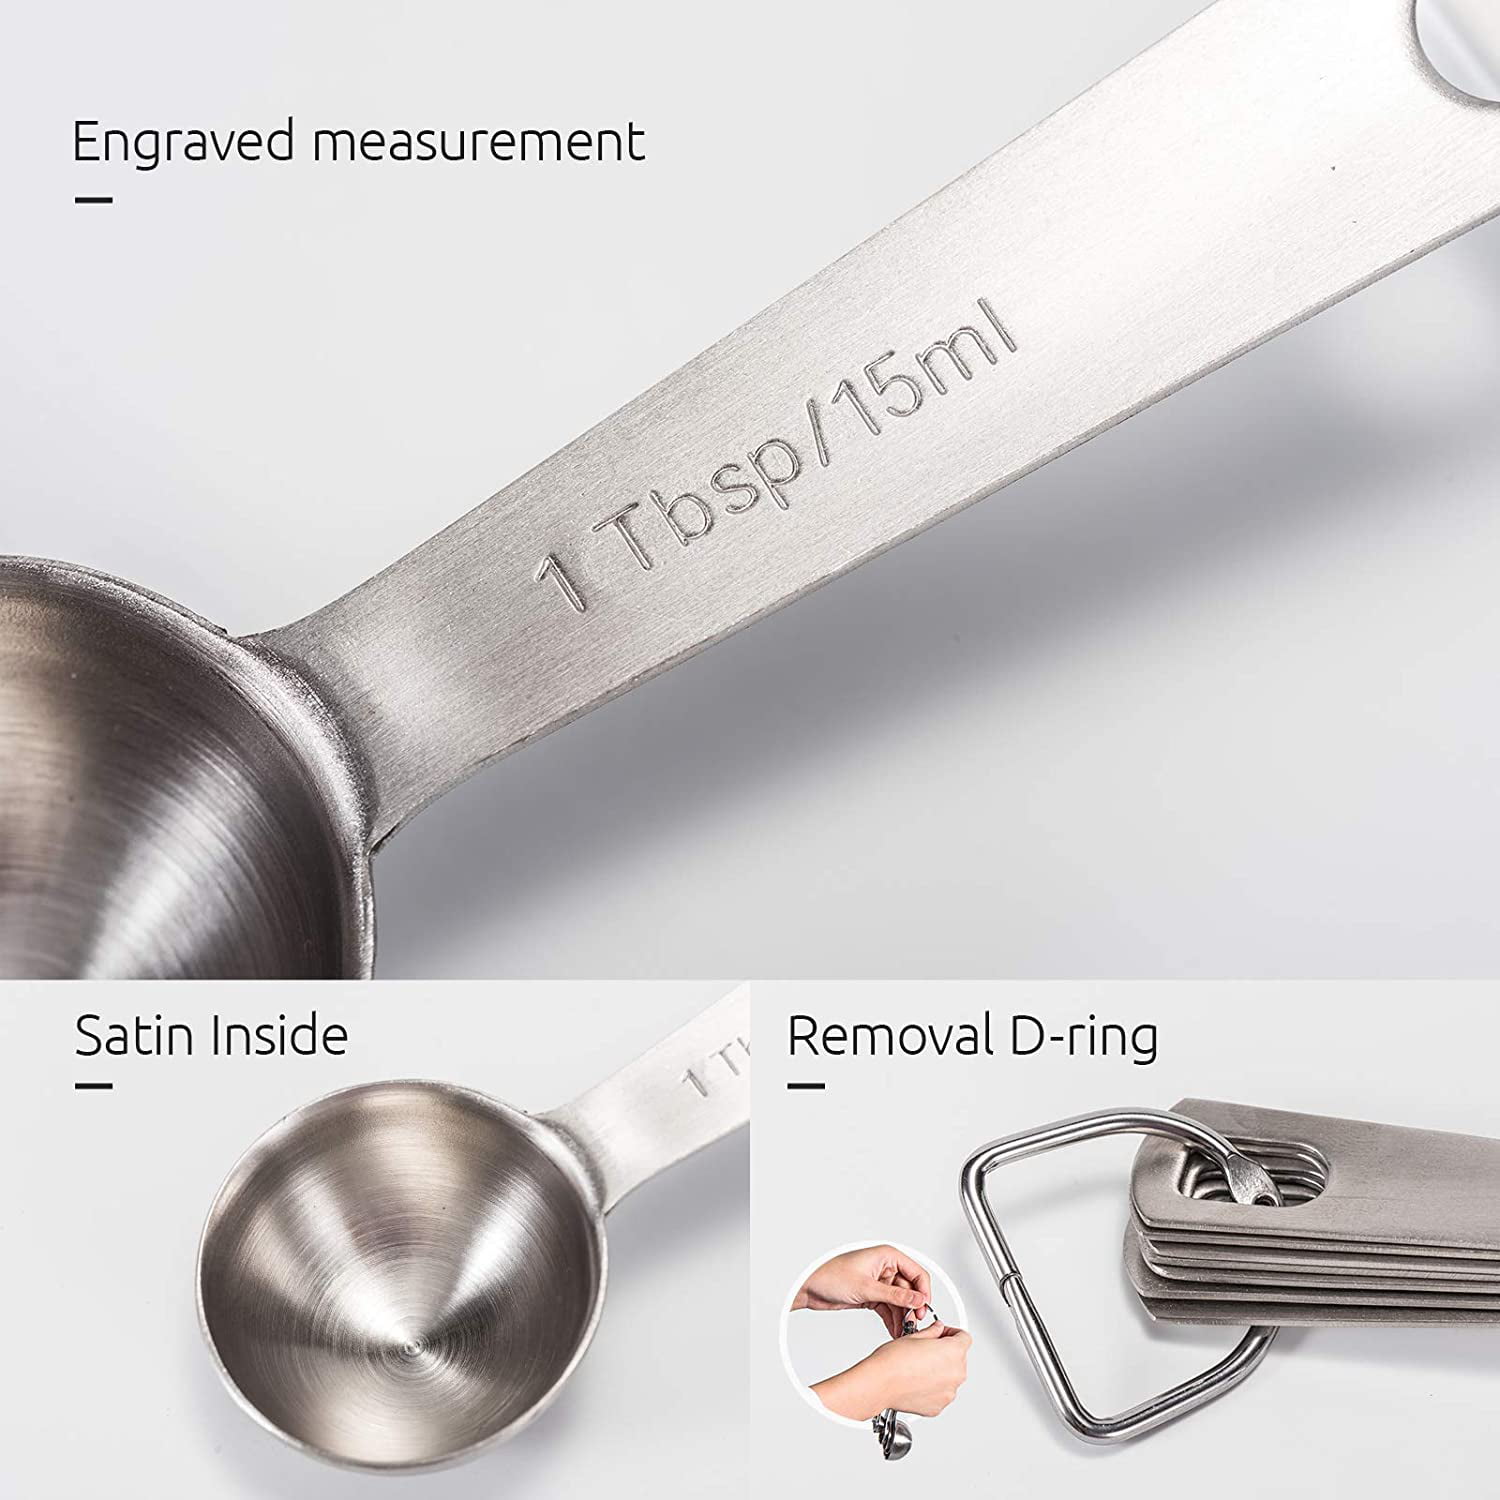 Dropship Measuring Spoons: U-Taste 18/8 Stainless Steel Measuring Spoons  Set Of 9 Piece: 1/16 Tsp; 1/8 Tsp; 1/4 Tsp; 1/3 Tsp; 1/2 Tsp; 3/4 Tsp; 1 Tsp;  1/2 Tbsp & 1 Tbsp